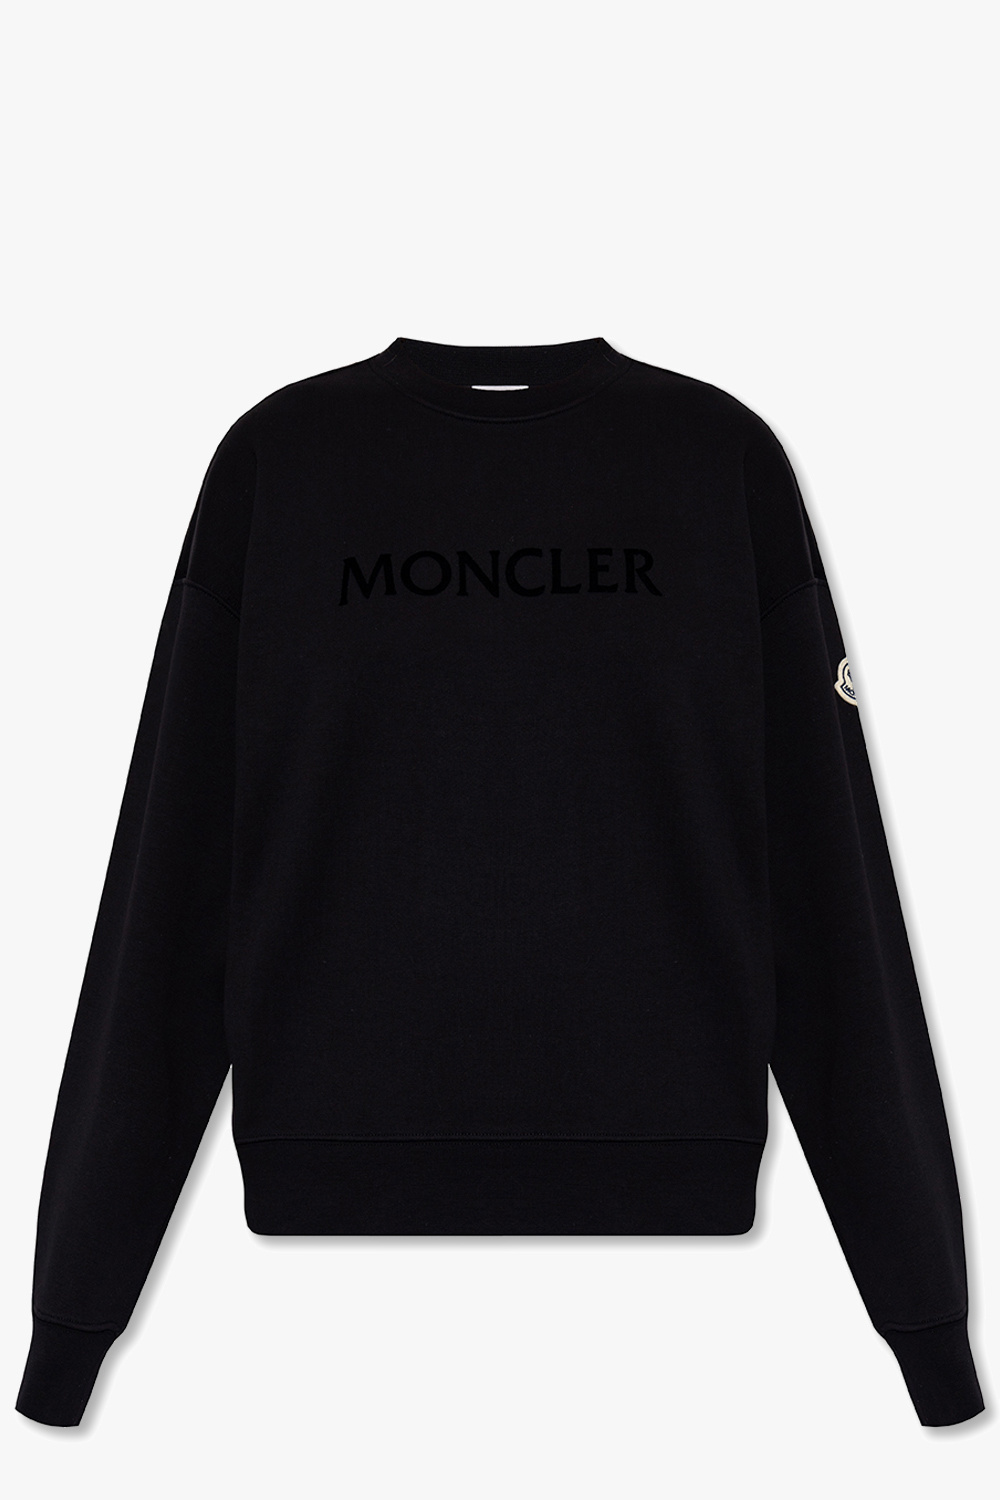 Universal Lender Sportsman buy burton quilted bomber jacket | Moncler Sweatshirt with logo | Women's  Clothing | StclaircomoShops